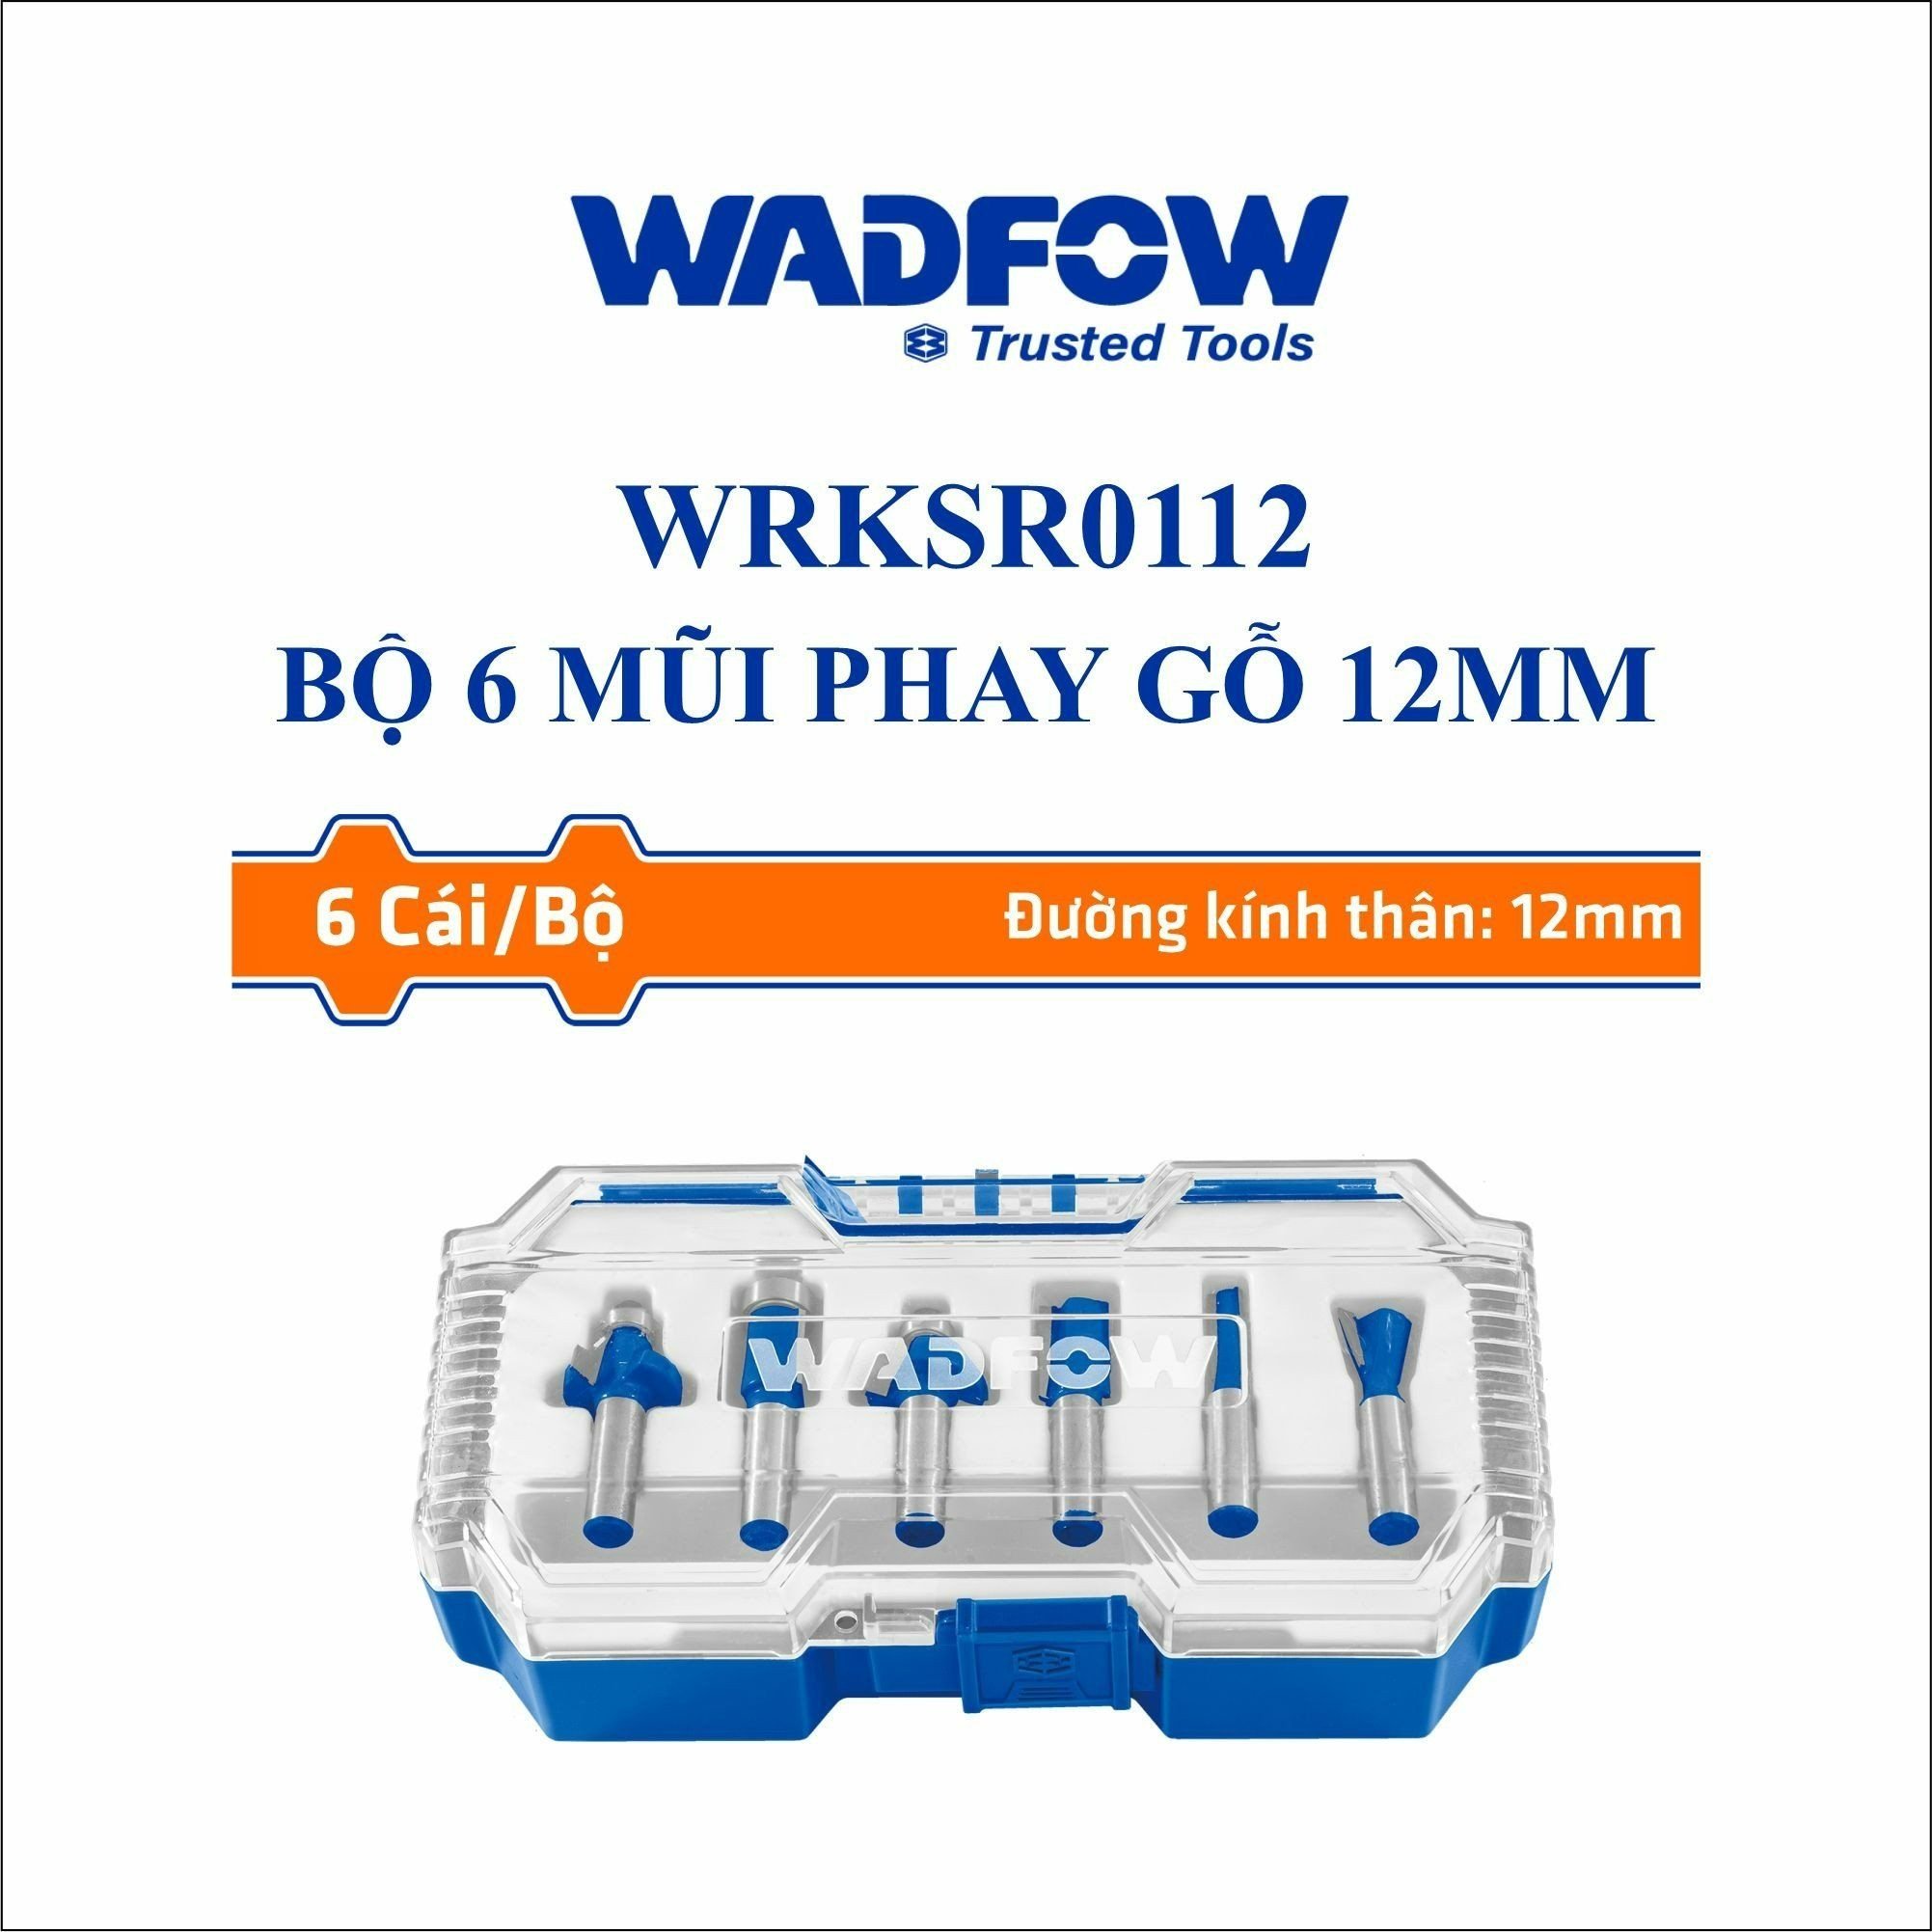  Bộ 6 mũi phay gỗ 12mm WADFOW WRKSR0112 